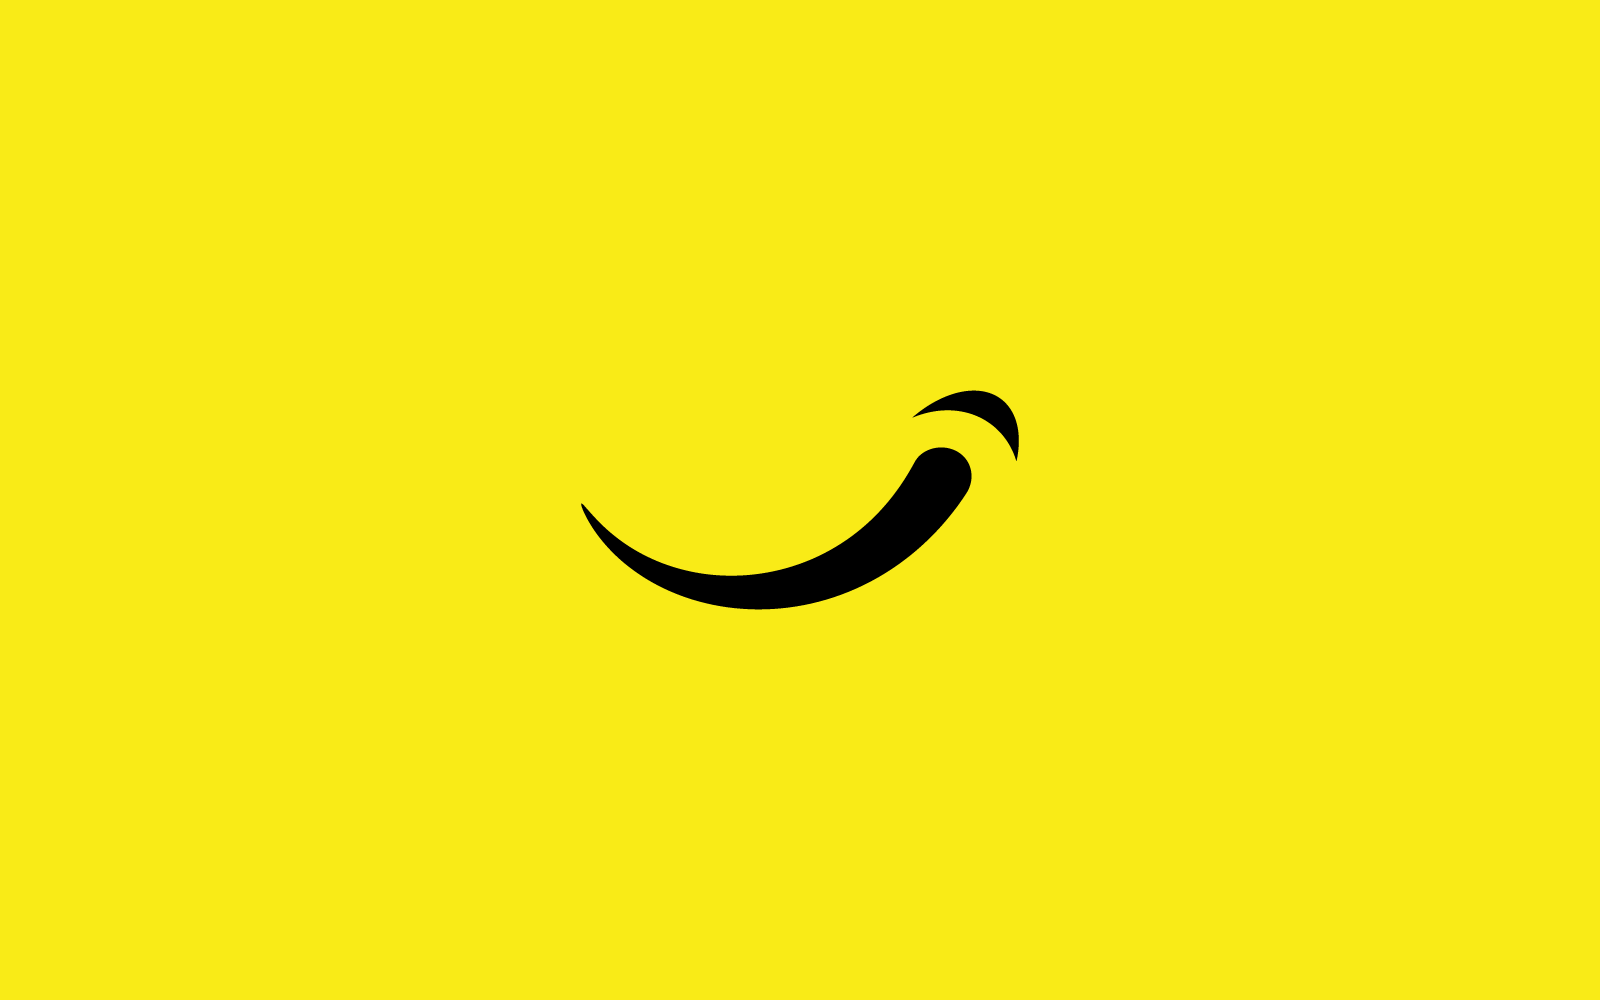 Smile happy face vector flat design template